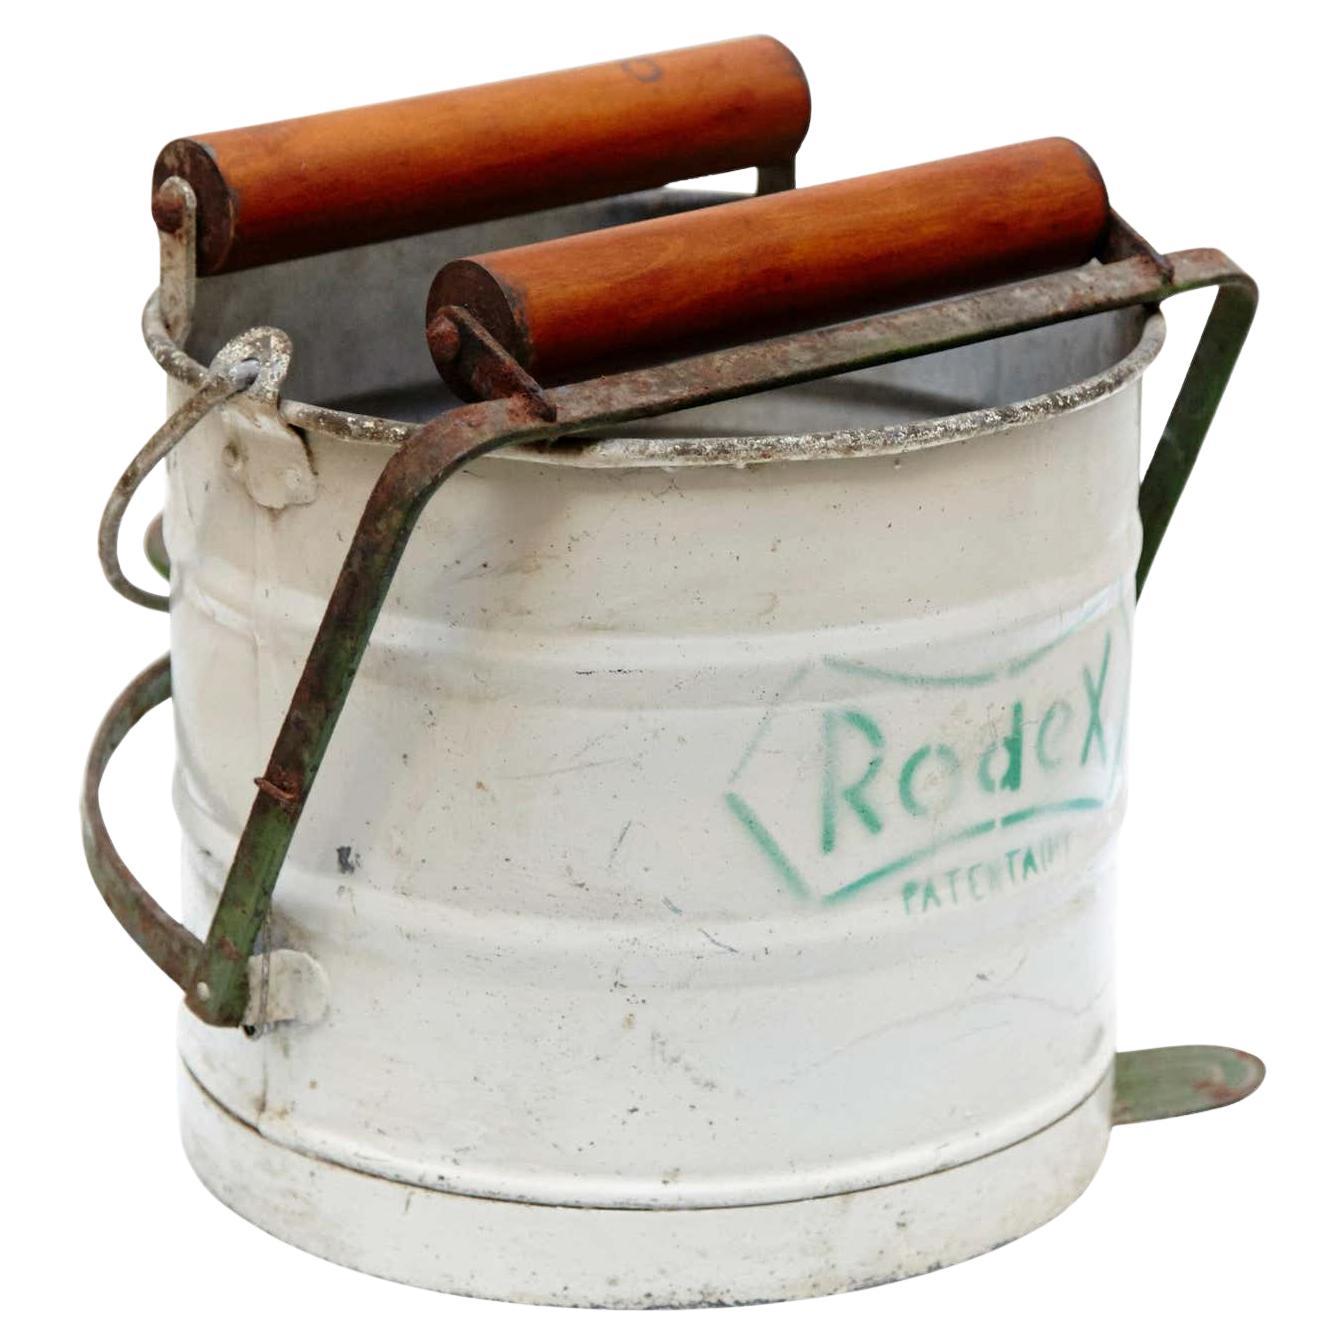 Rodex Mop Bucket Frist Patent by Manuel Jalon Corominas